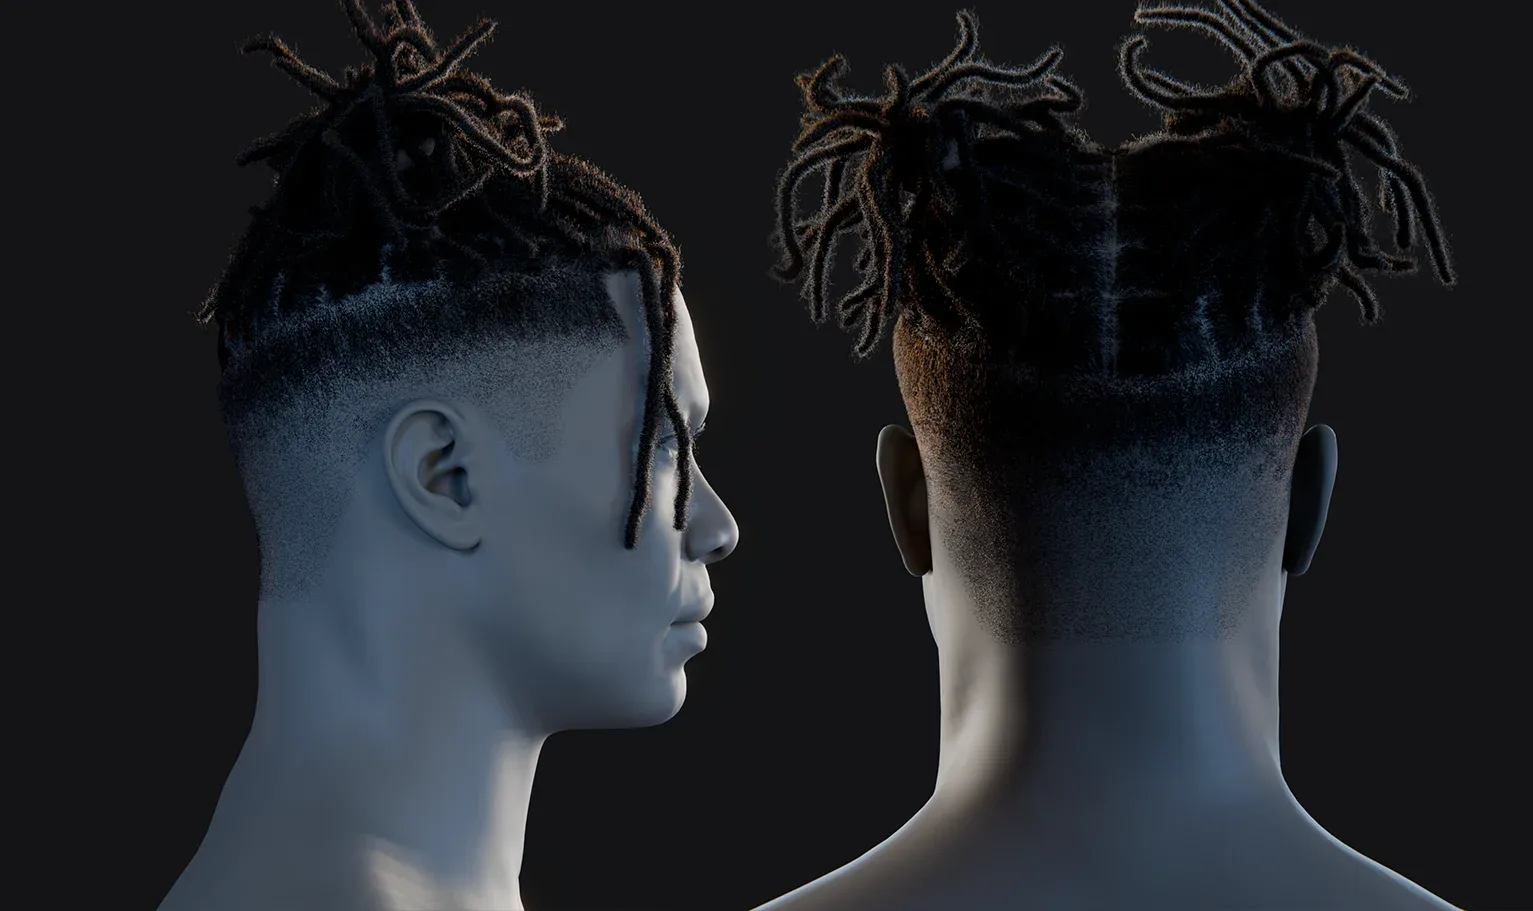 PixelHair Hairstyle - Dreads Fade 010 (Hair for blender/ unreal engine / metahuman) Afro hair | Kinky hair | 4c Hair | African / African American Hair